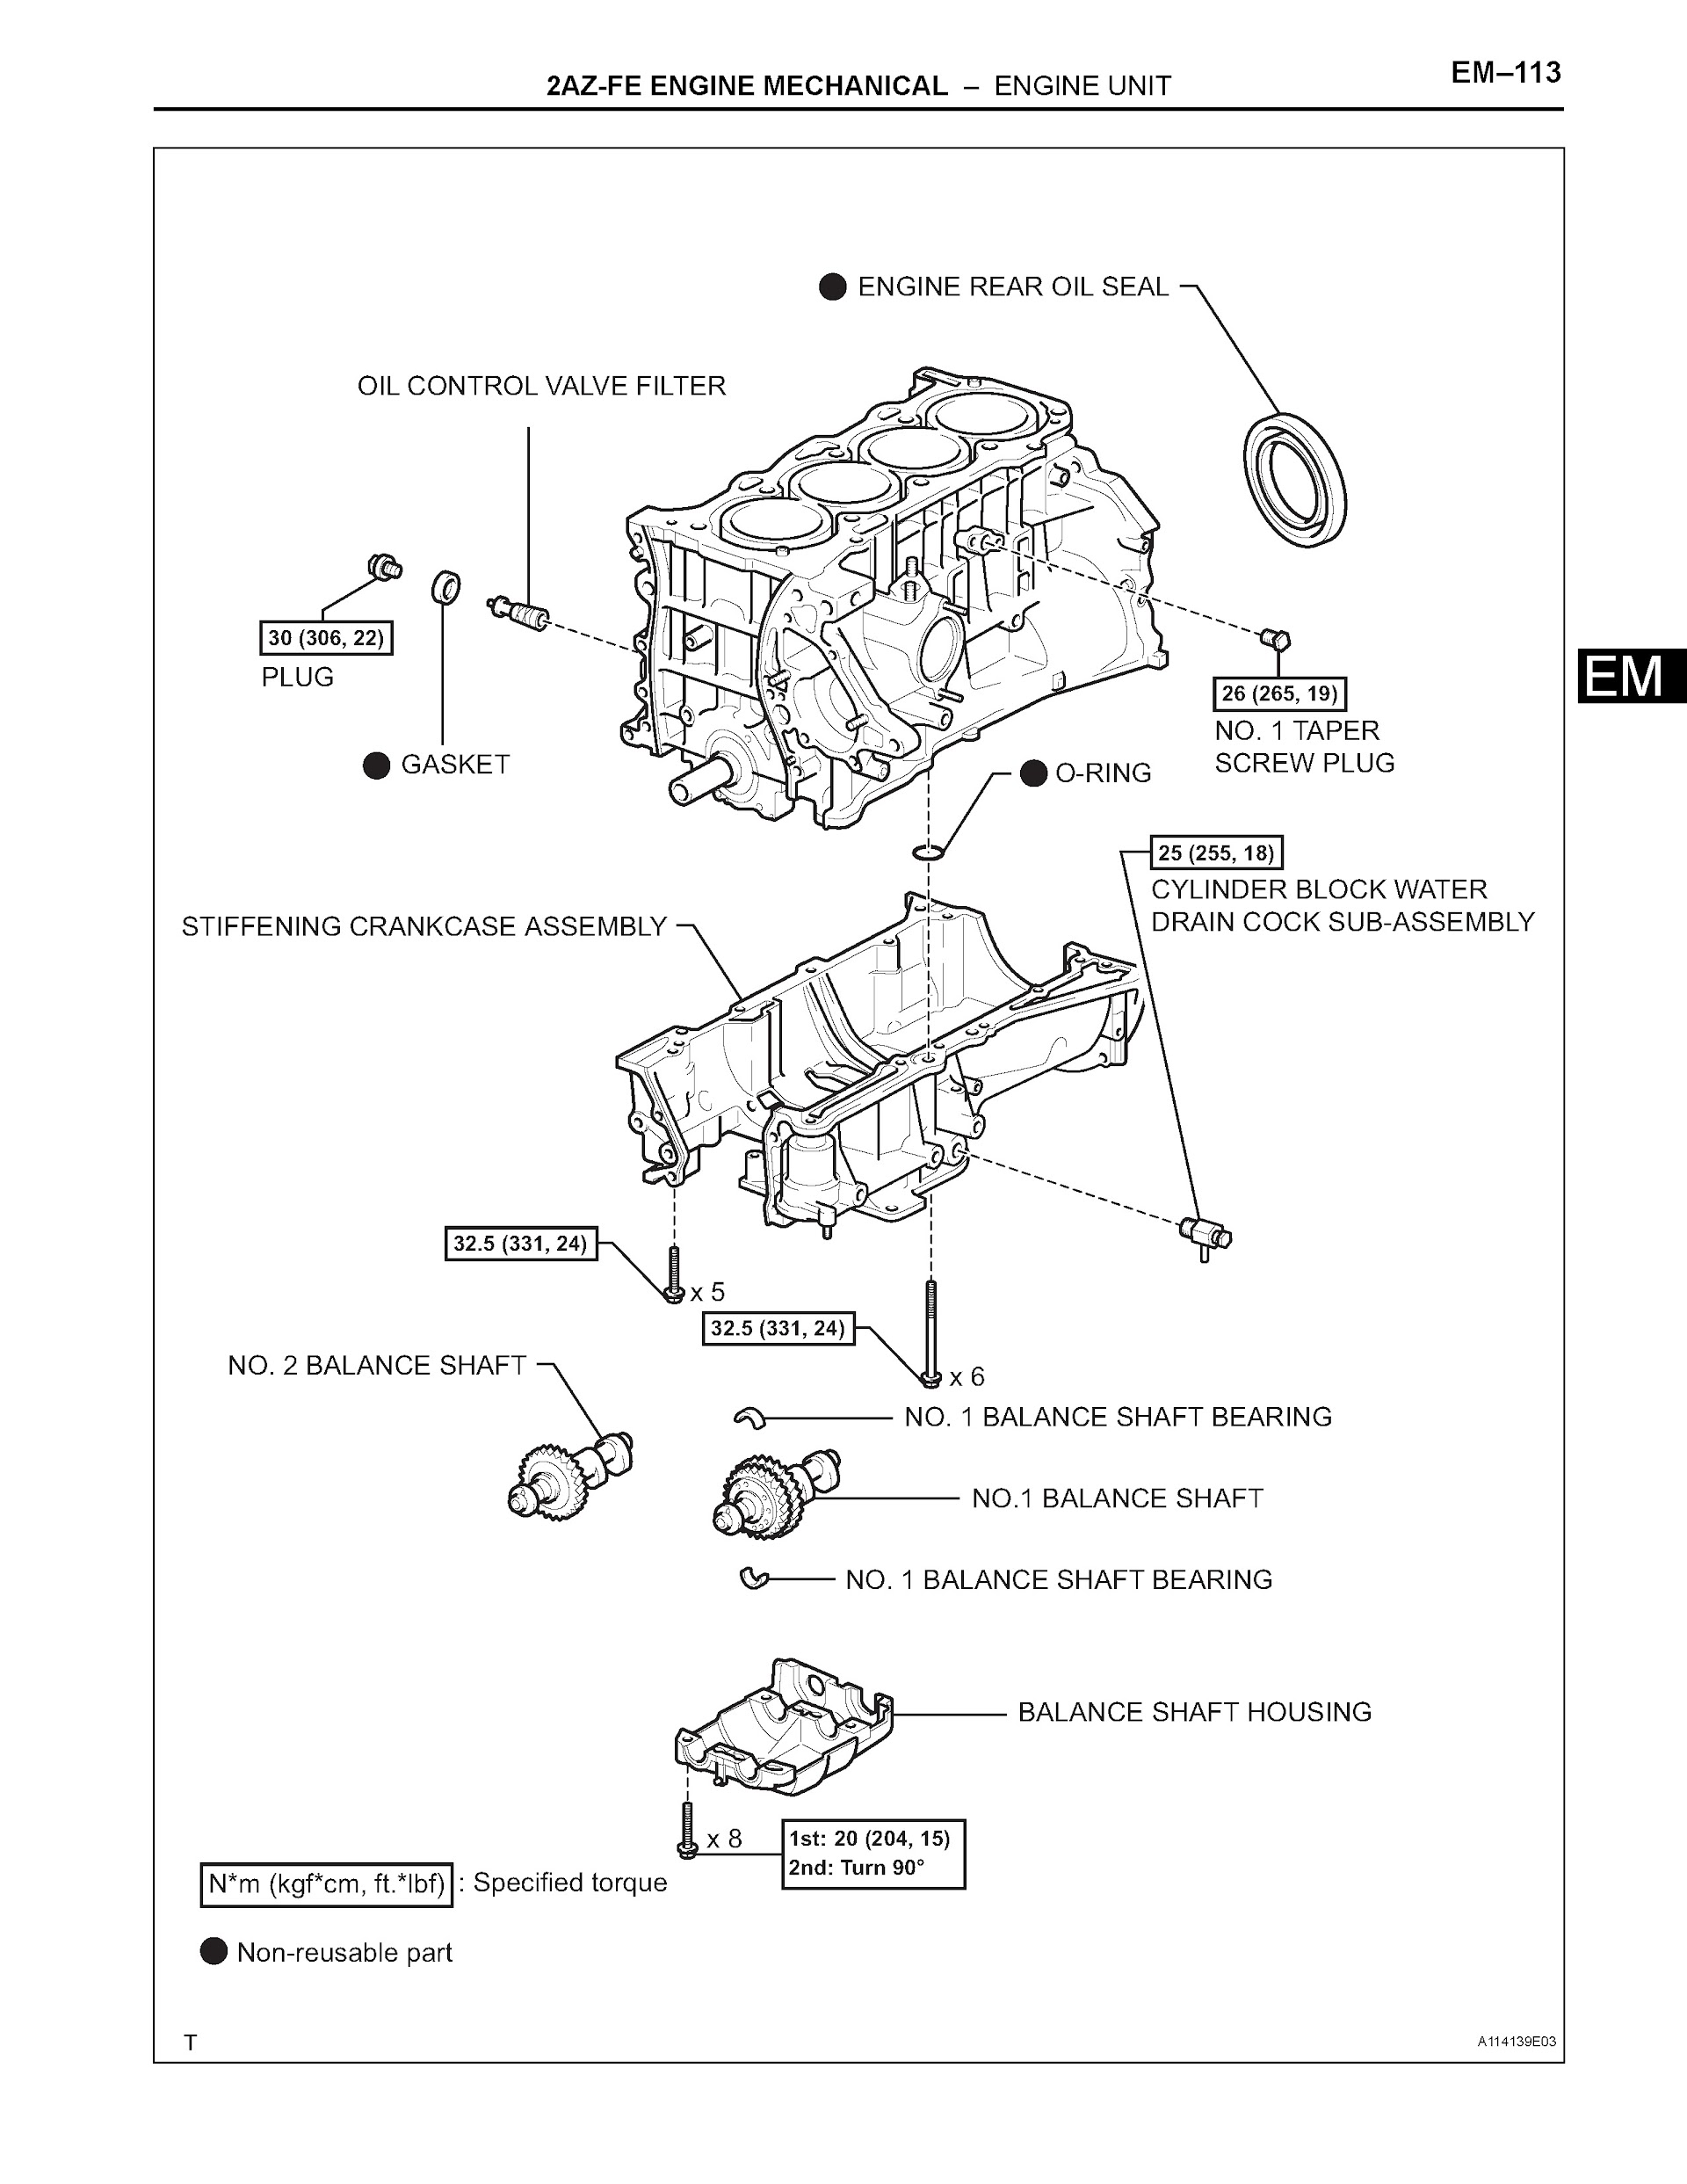 2005-2010 Toyota Scion tC Repair Manual, 2AZ-FE Engine Mechanical